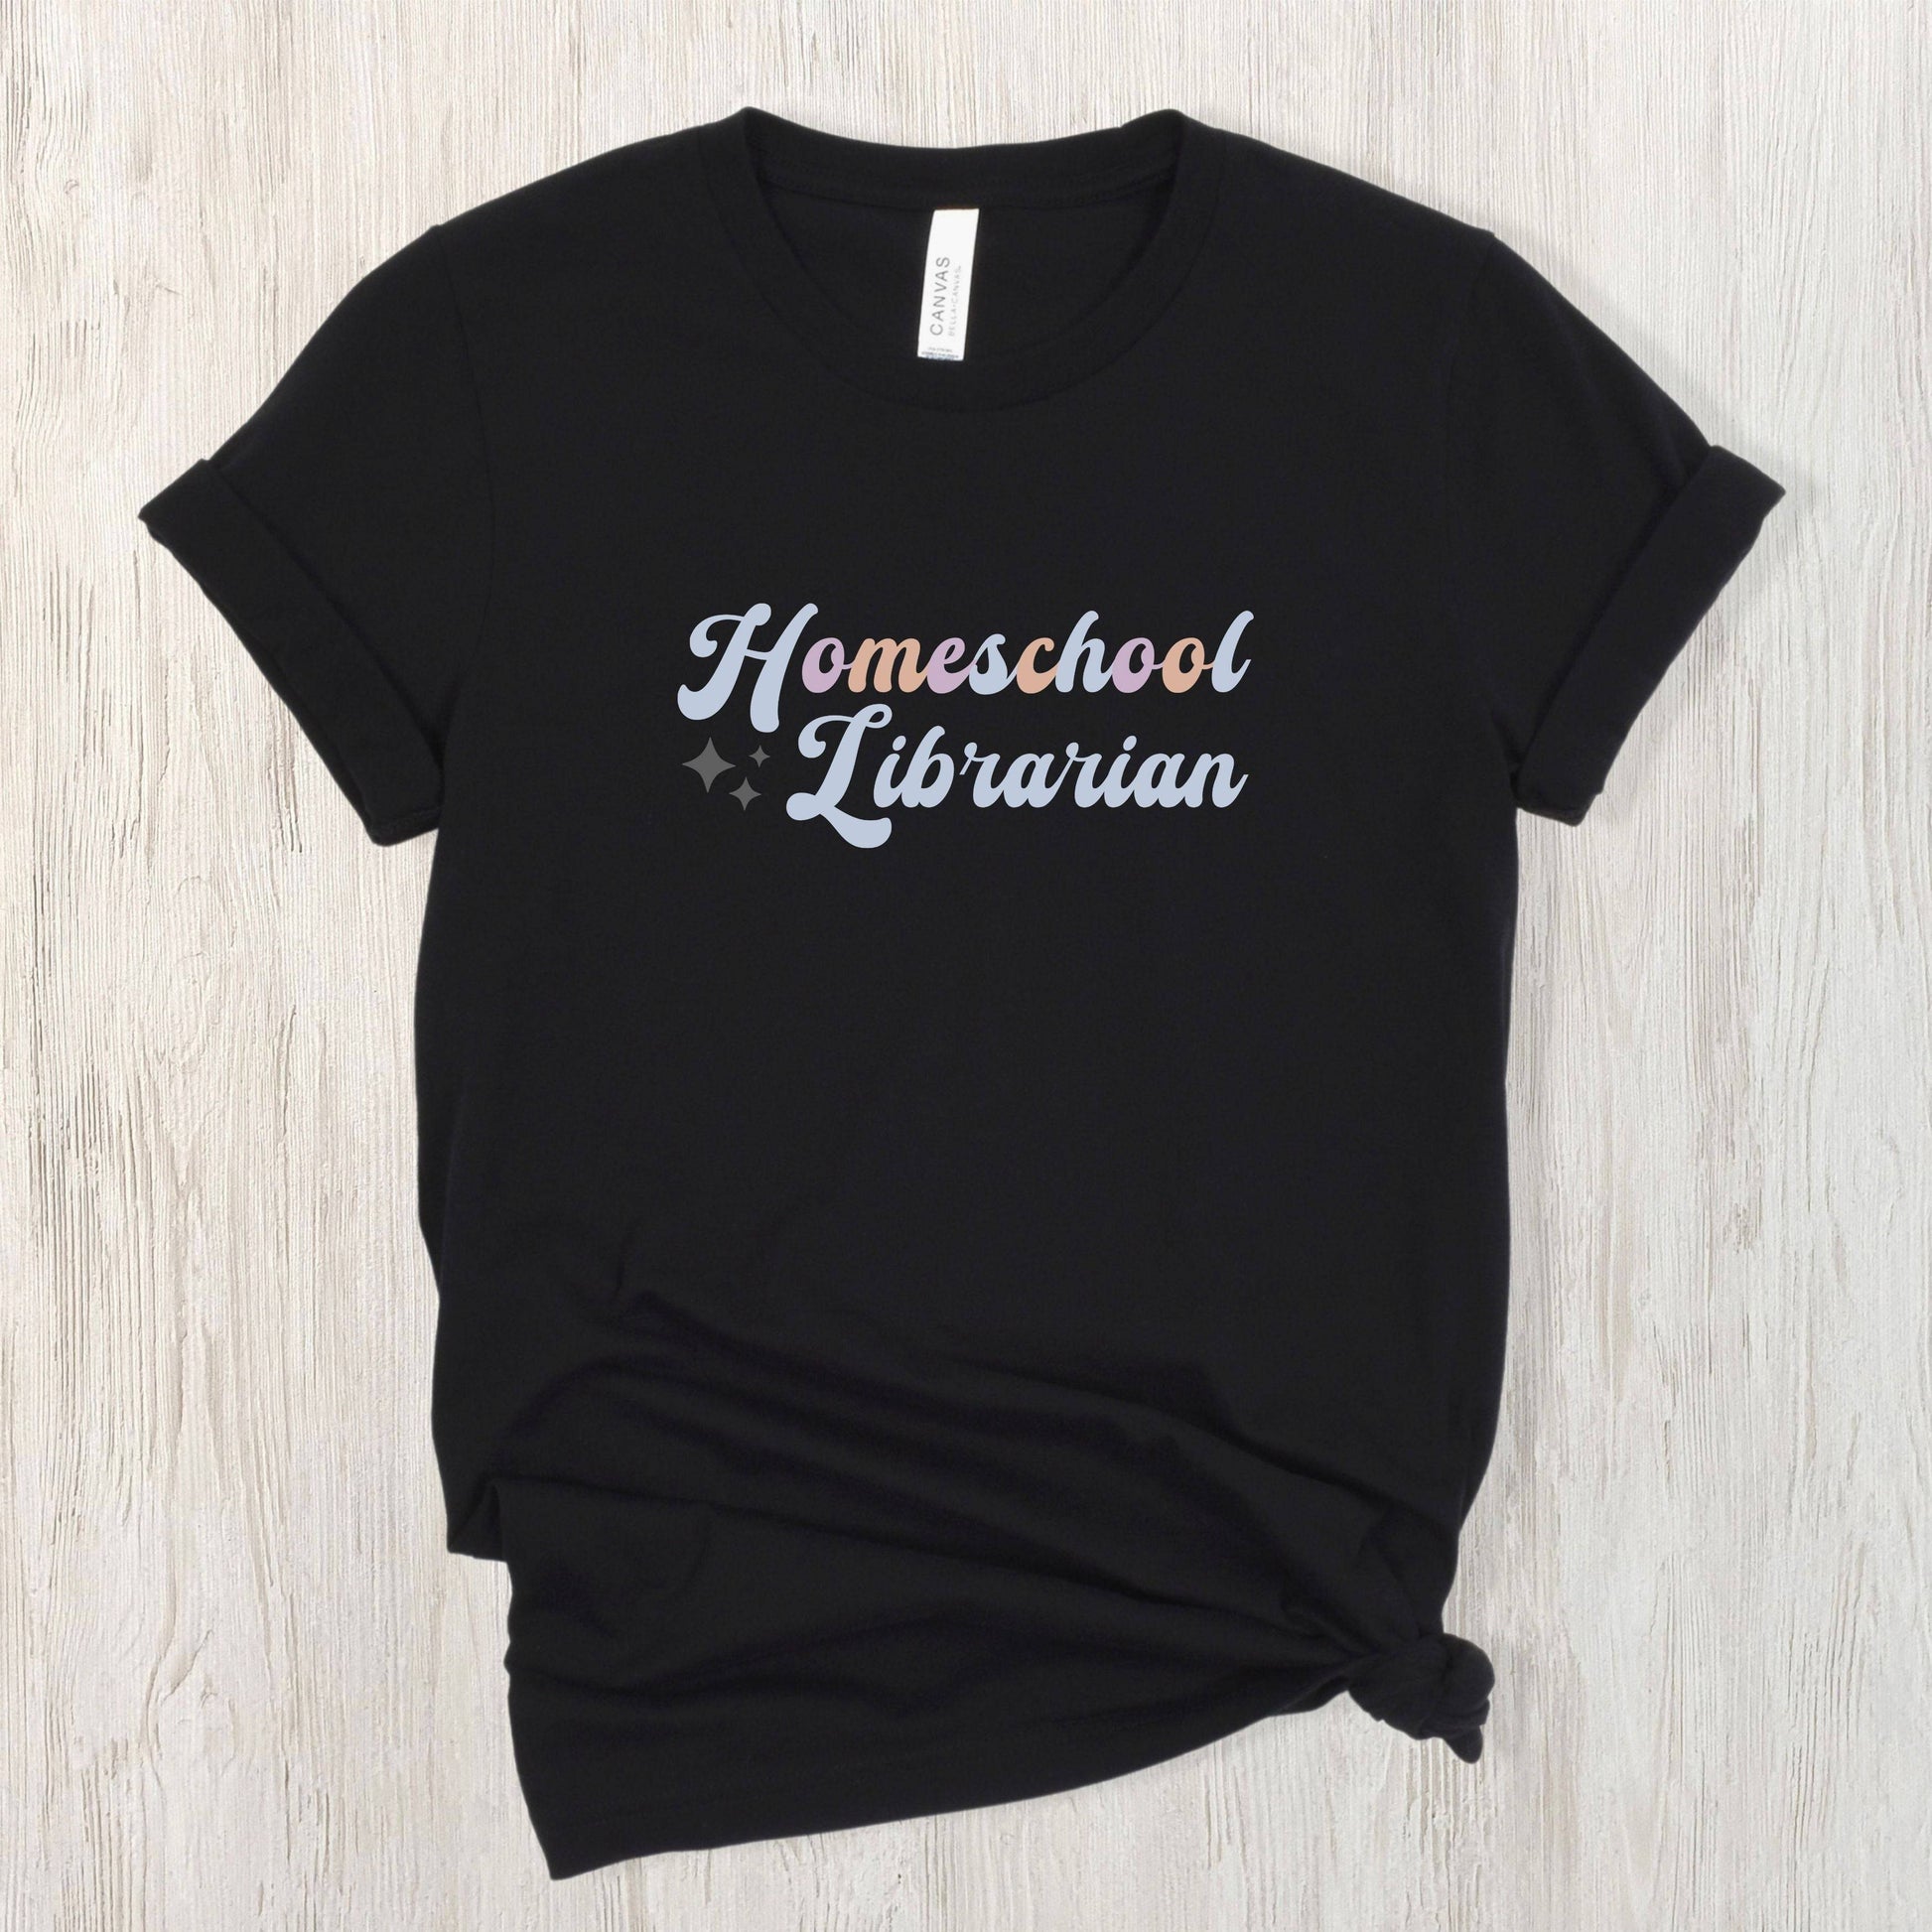 homeschool librarian black shirt for women moms